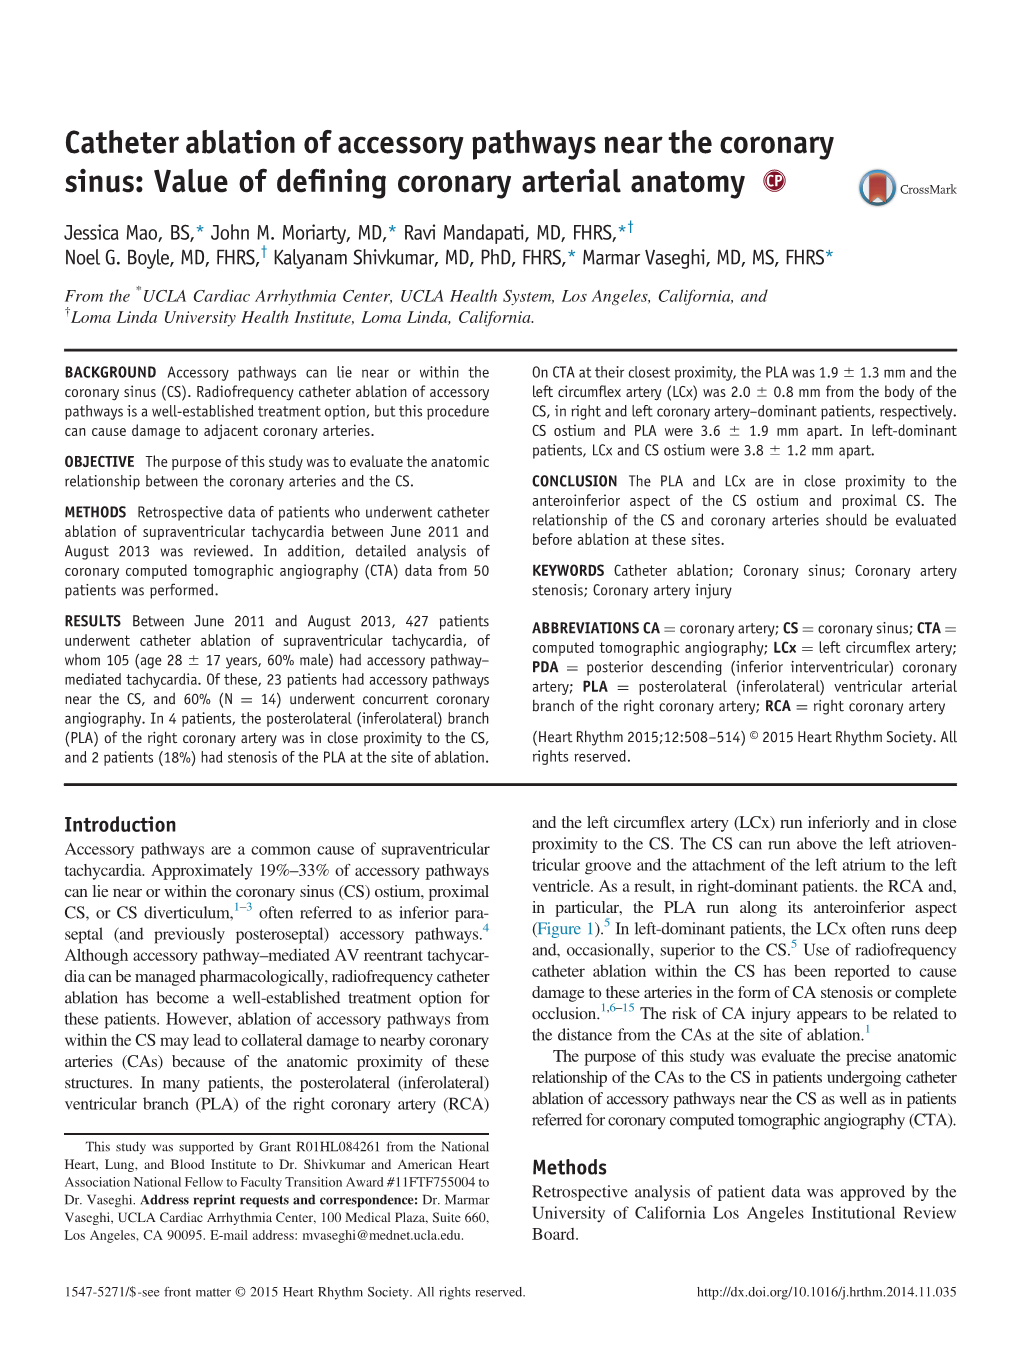 Catheter Ablation of Accessory Pathways Near the Coronary Sinus: Value of Deﬁning Coronary Arterial Anatomy